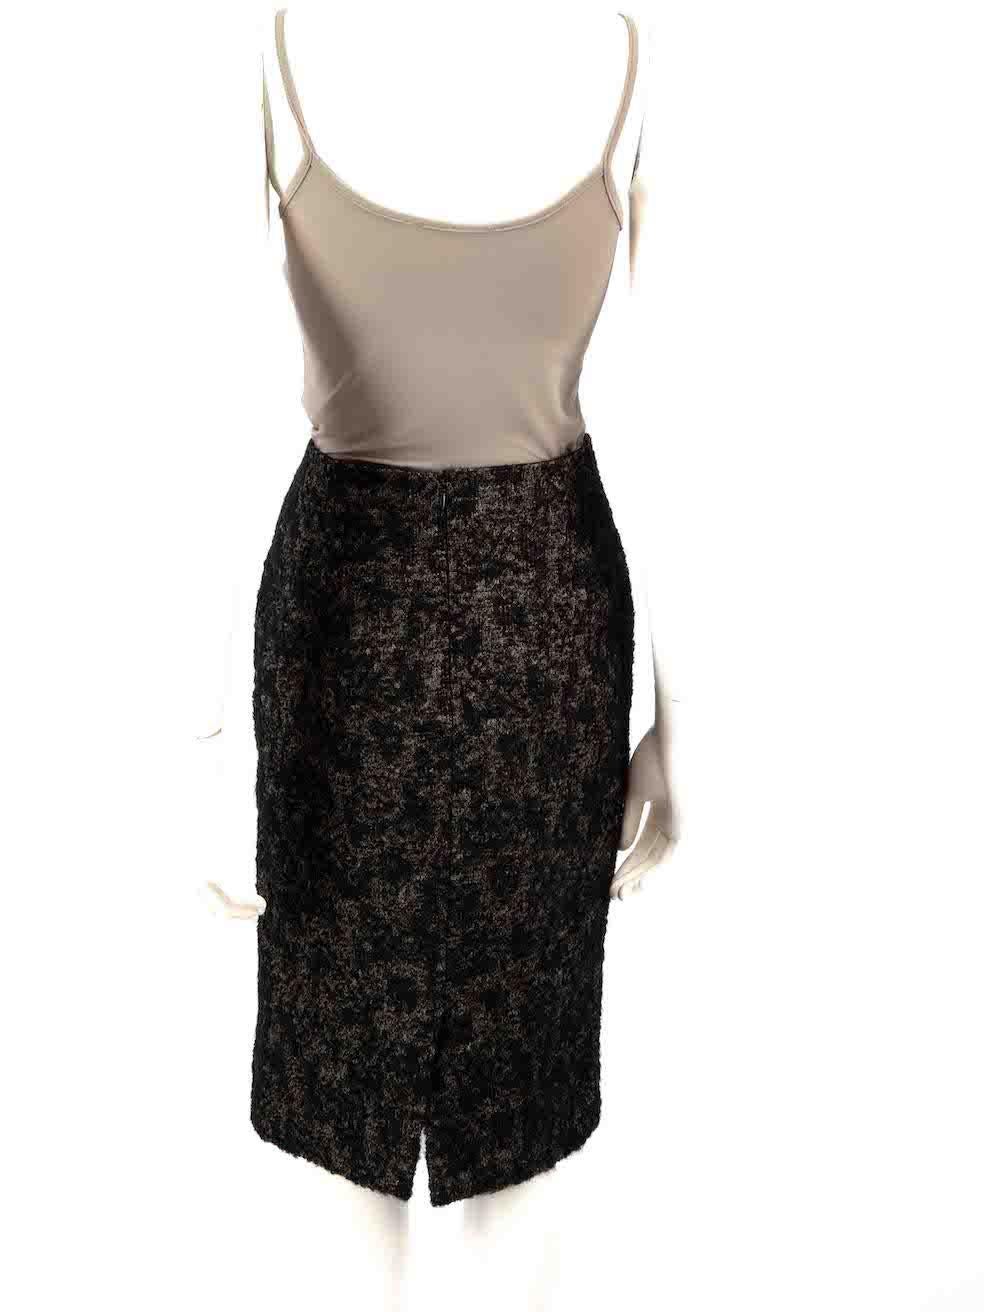 Bottega Veneta Black Woven Pencil Skirt Size L In Excellent Condition For Sale In London, GB